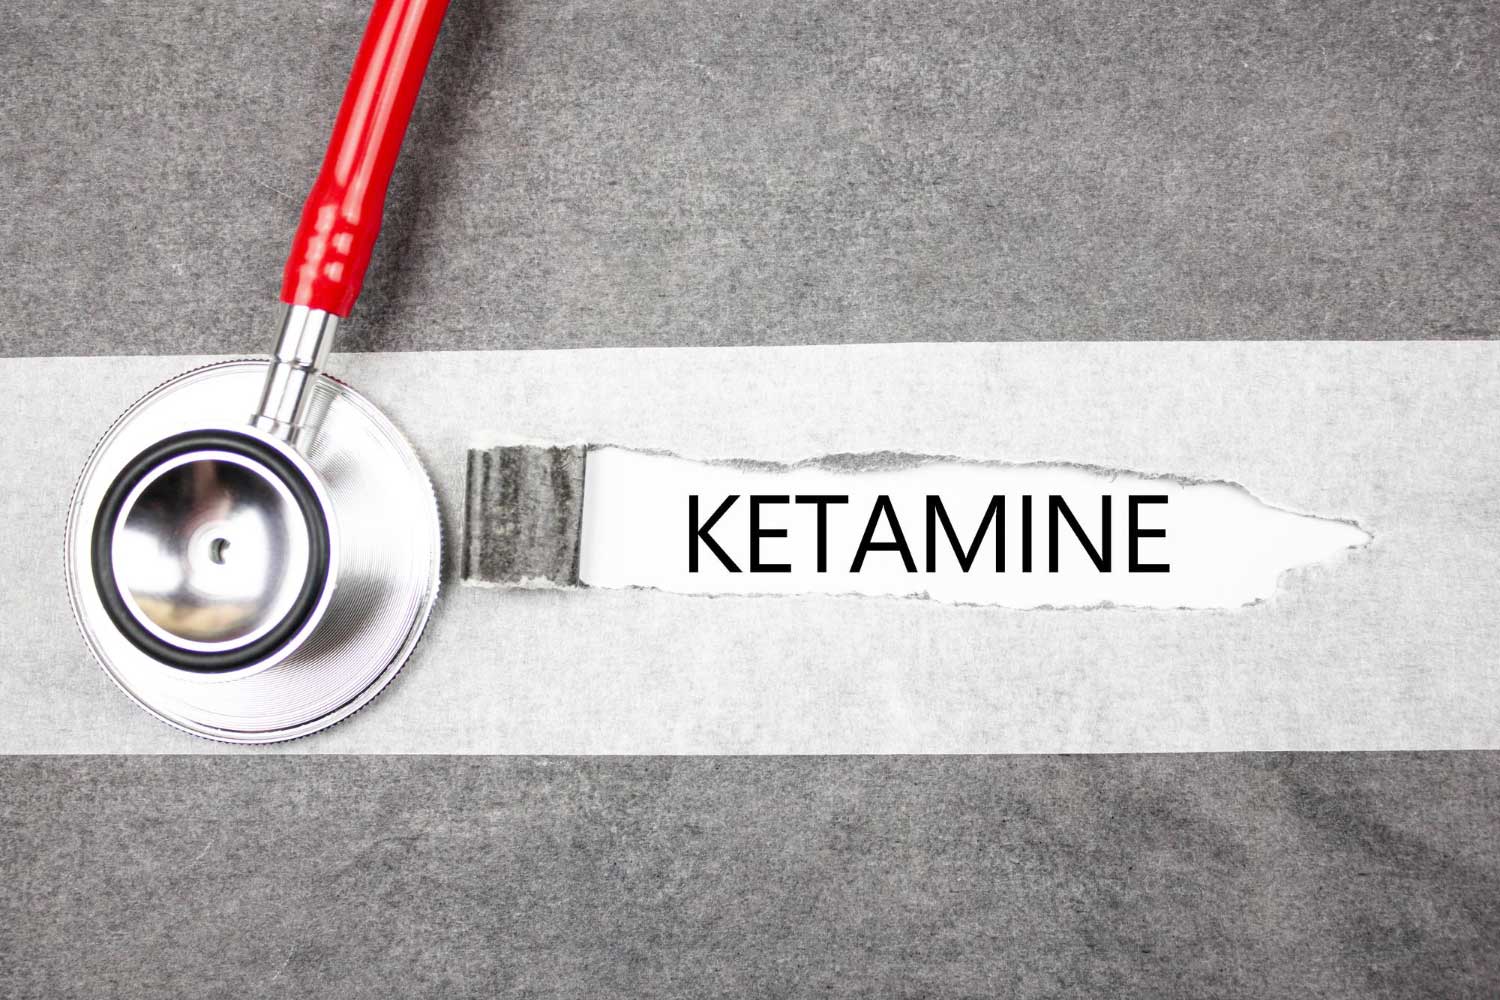 ketamine text inscription with stethoscope ketamine